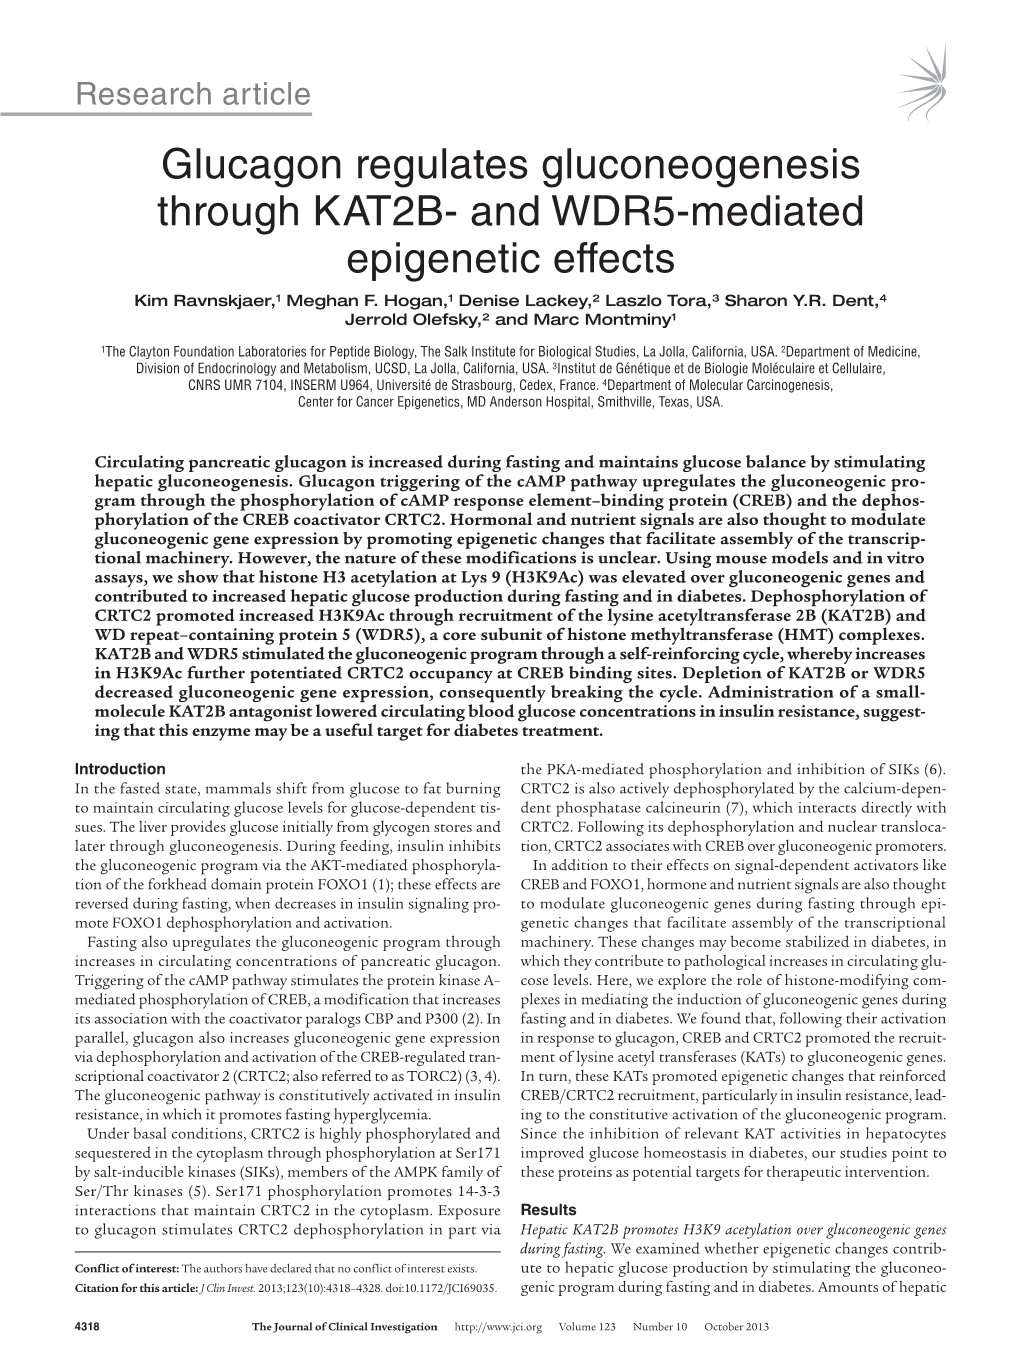 Glucagon Regulates Gluconeogenesis Through KAT2B- and WDR5-Mediated Epigenetic Effects Kim Ravnskjaer,1 Meghan F